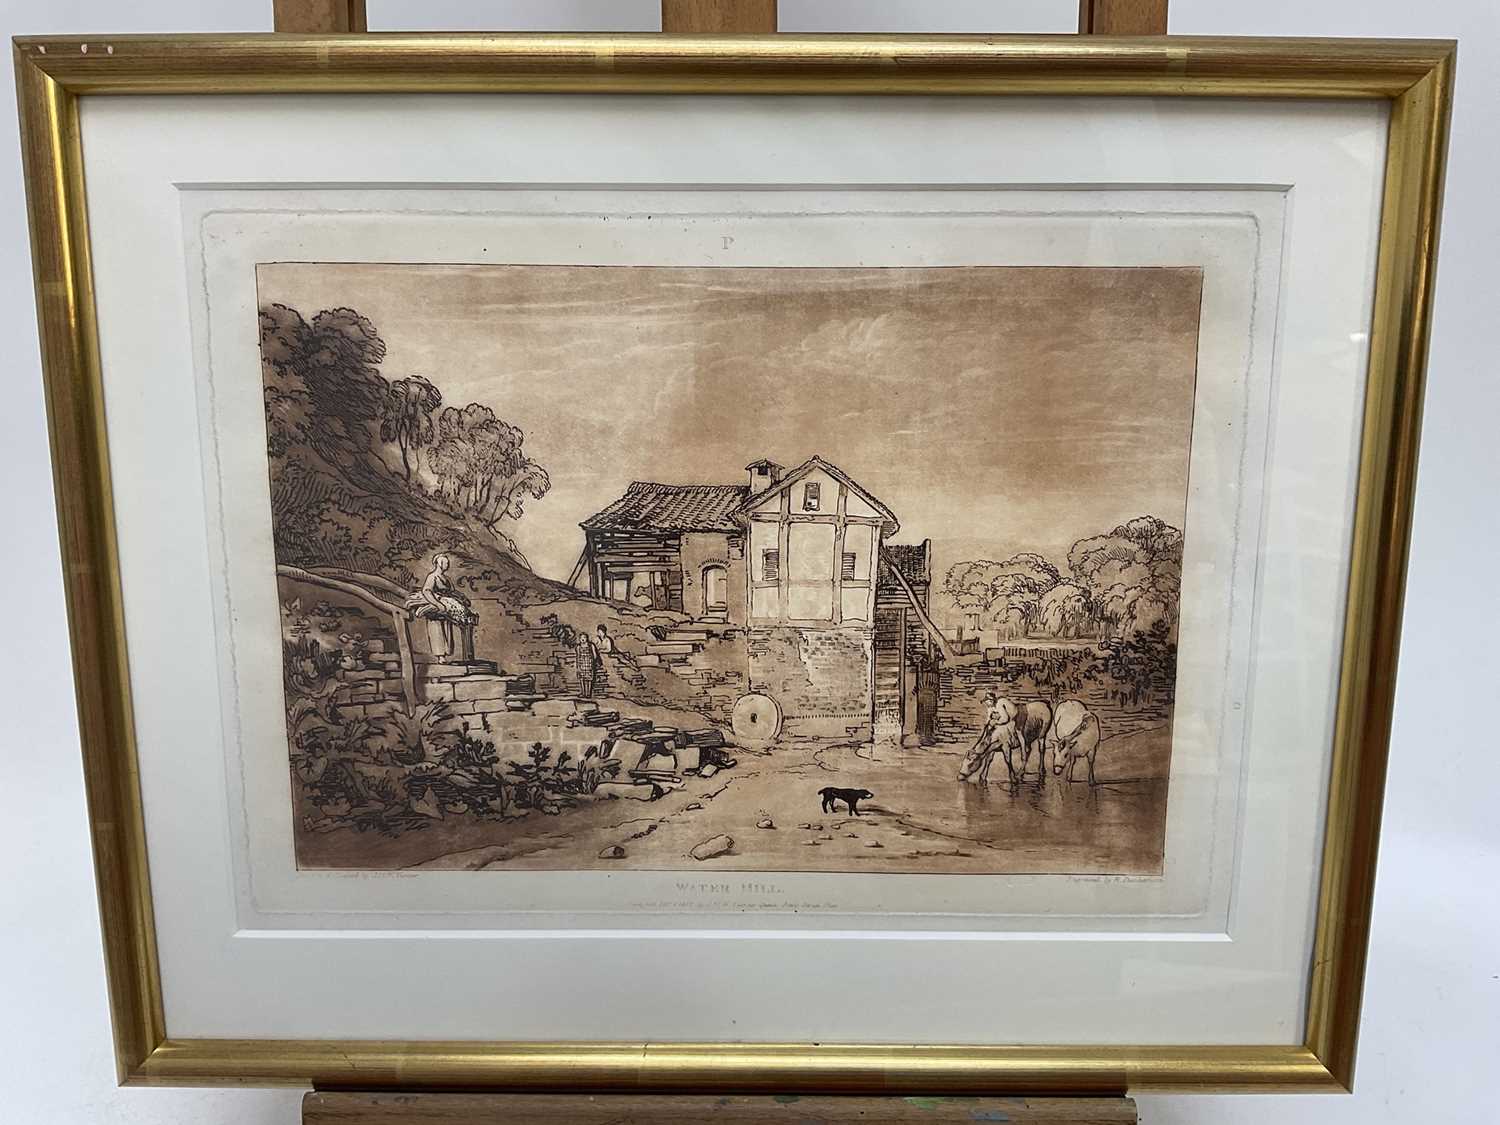 Lot 28 - After J. M. Turner, etching and mezzotint - Water Mill, from Liber Studiorum, 22cm x 31cm, in glazed gilt frame 
Provenance: Goldmark Gallery, Rutland